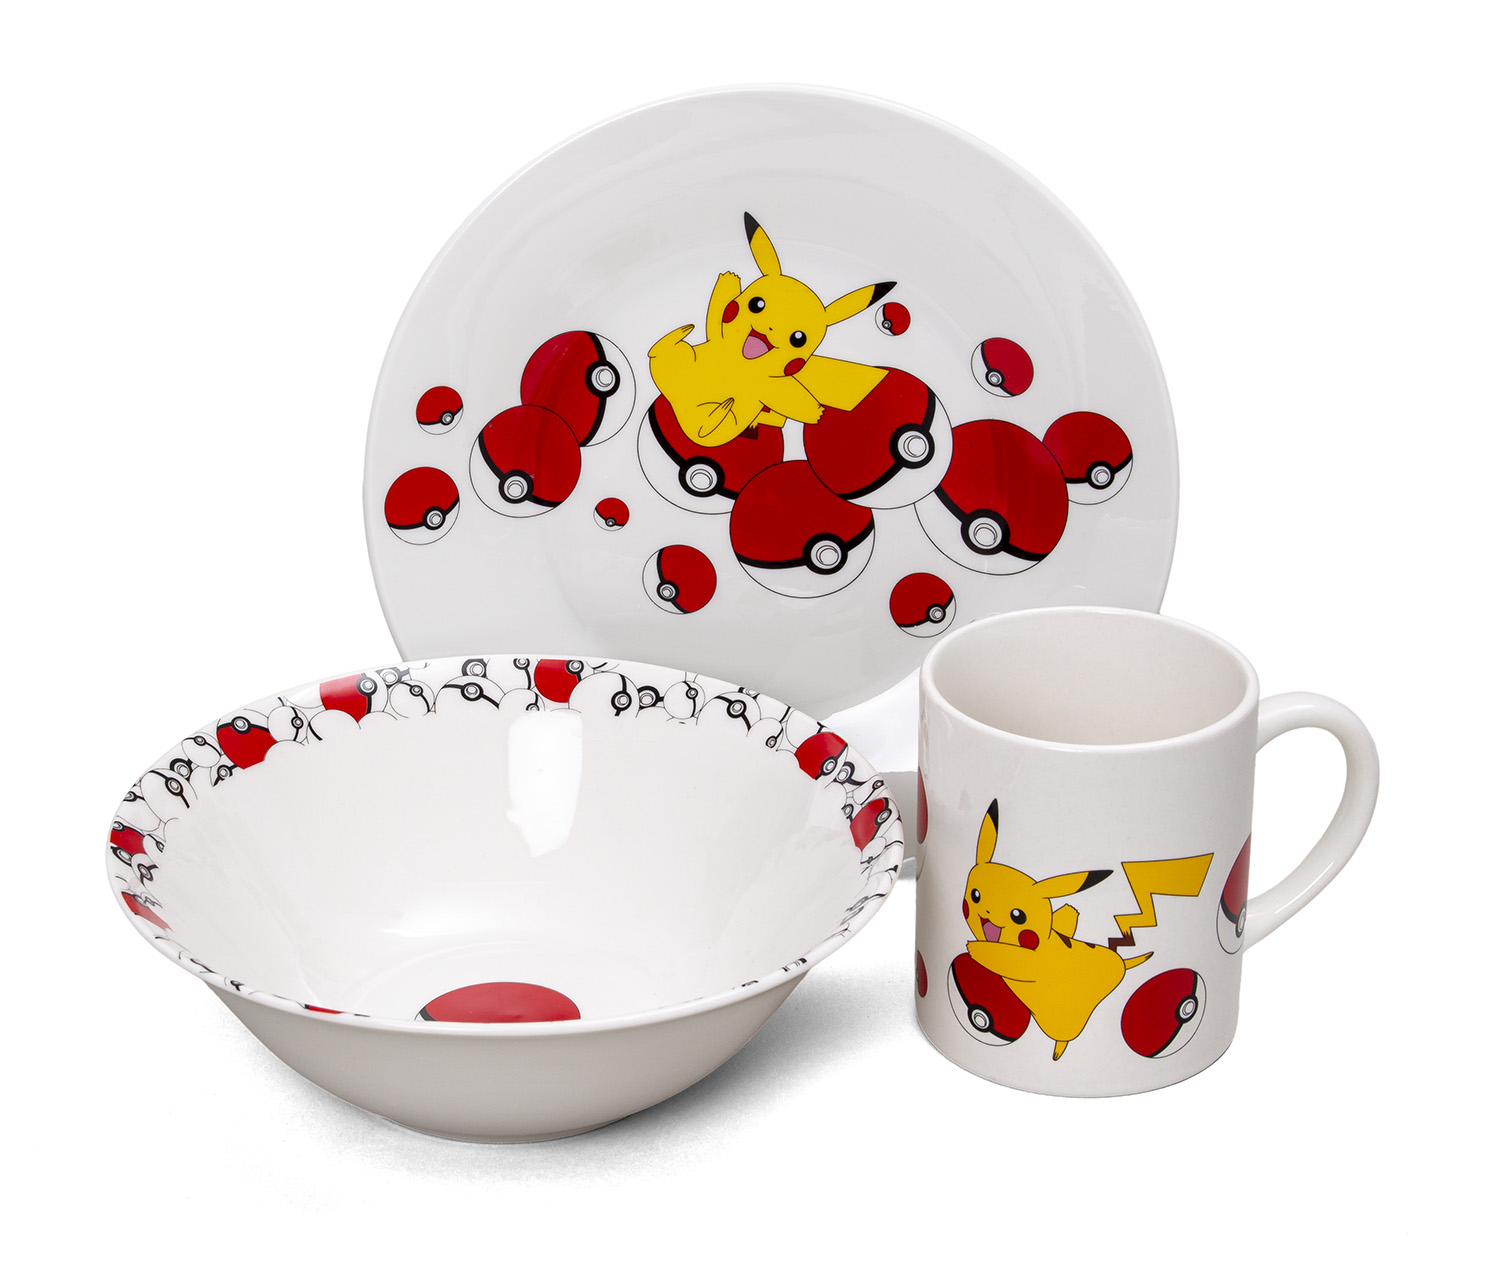 Frühstücksset (Schale, Teller, Tasse) - Pokémon - Pikachu Pokéball